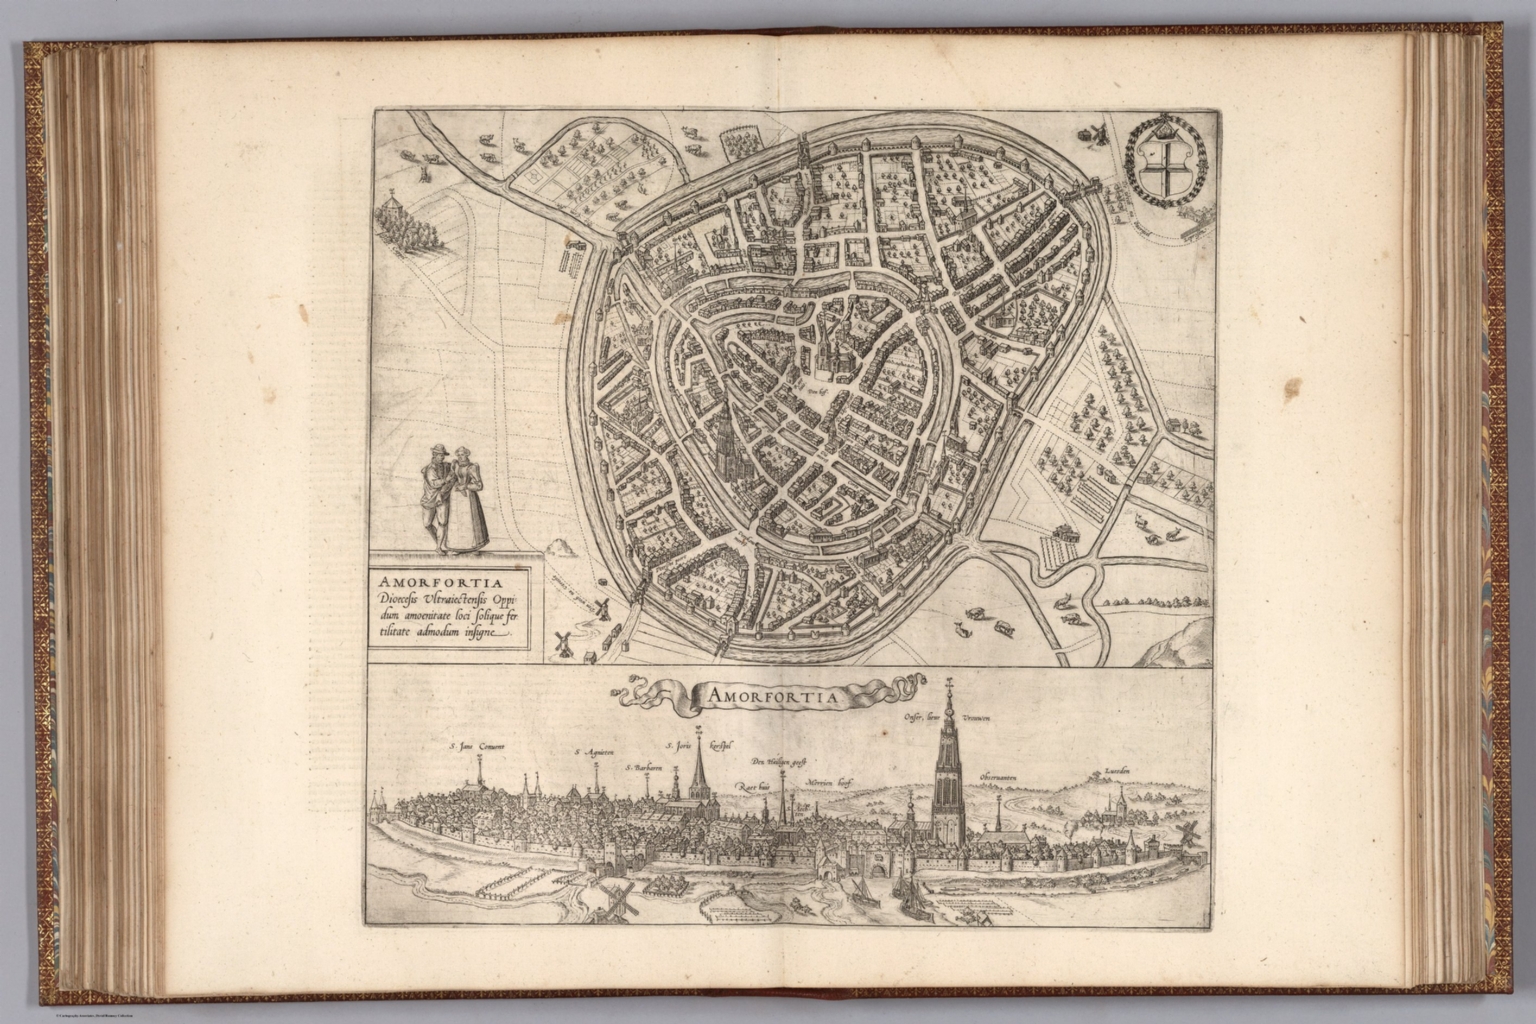 Vol IV (15) Amorfortia (Amersfoort). - David Rumsey Historical Map ...